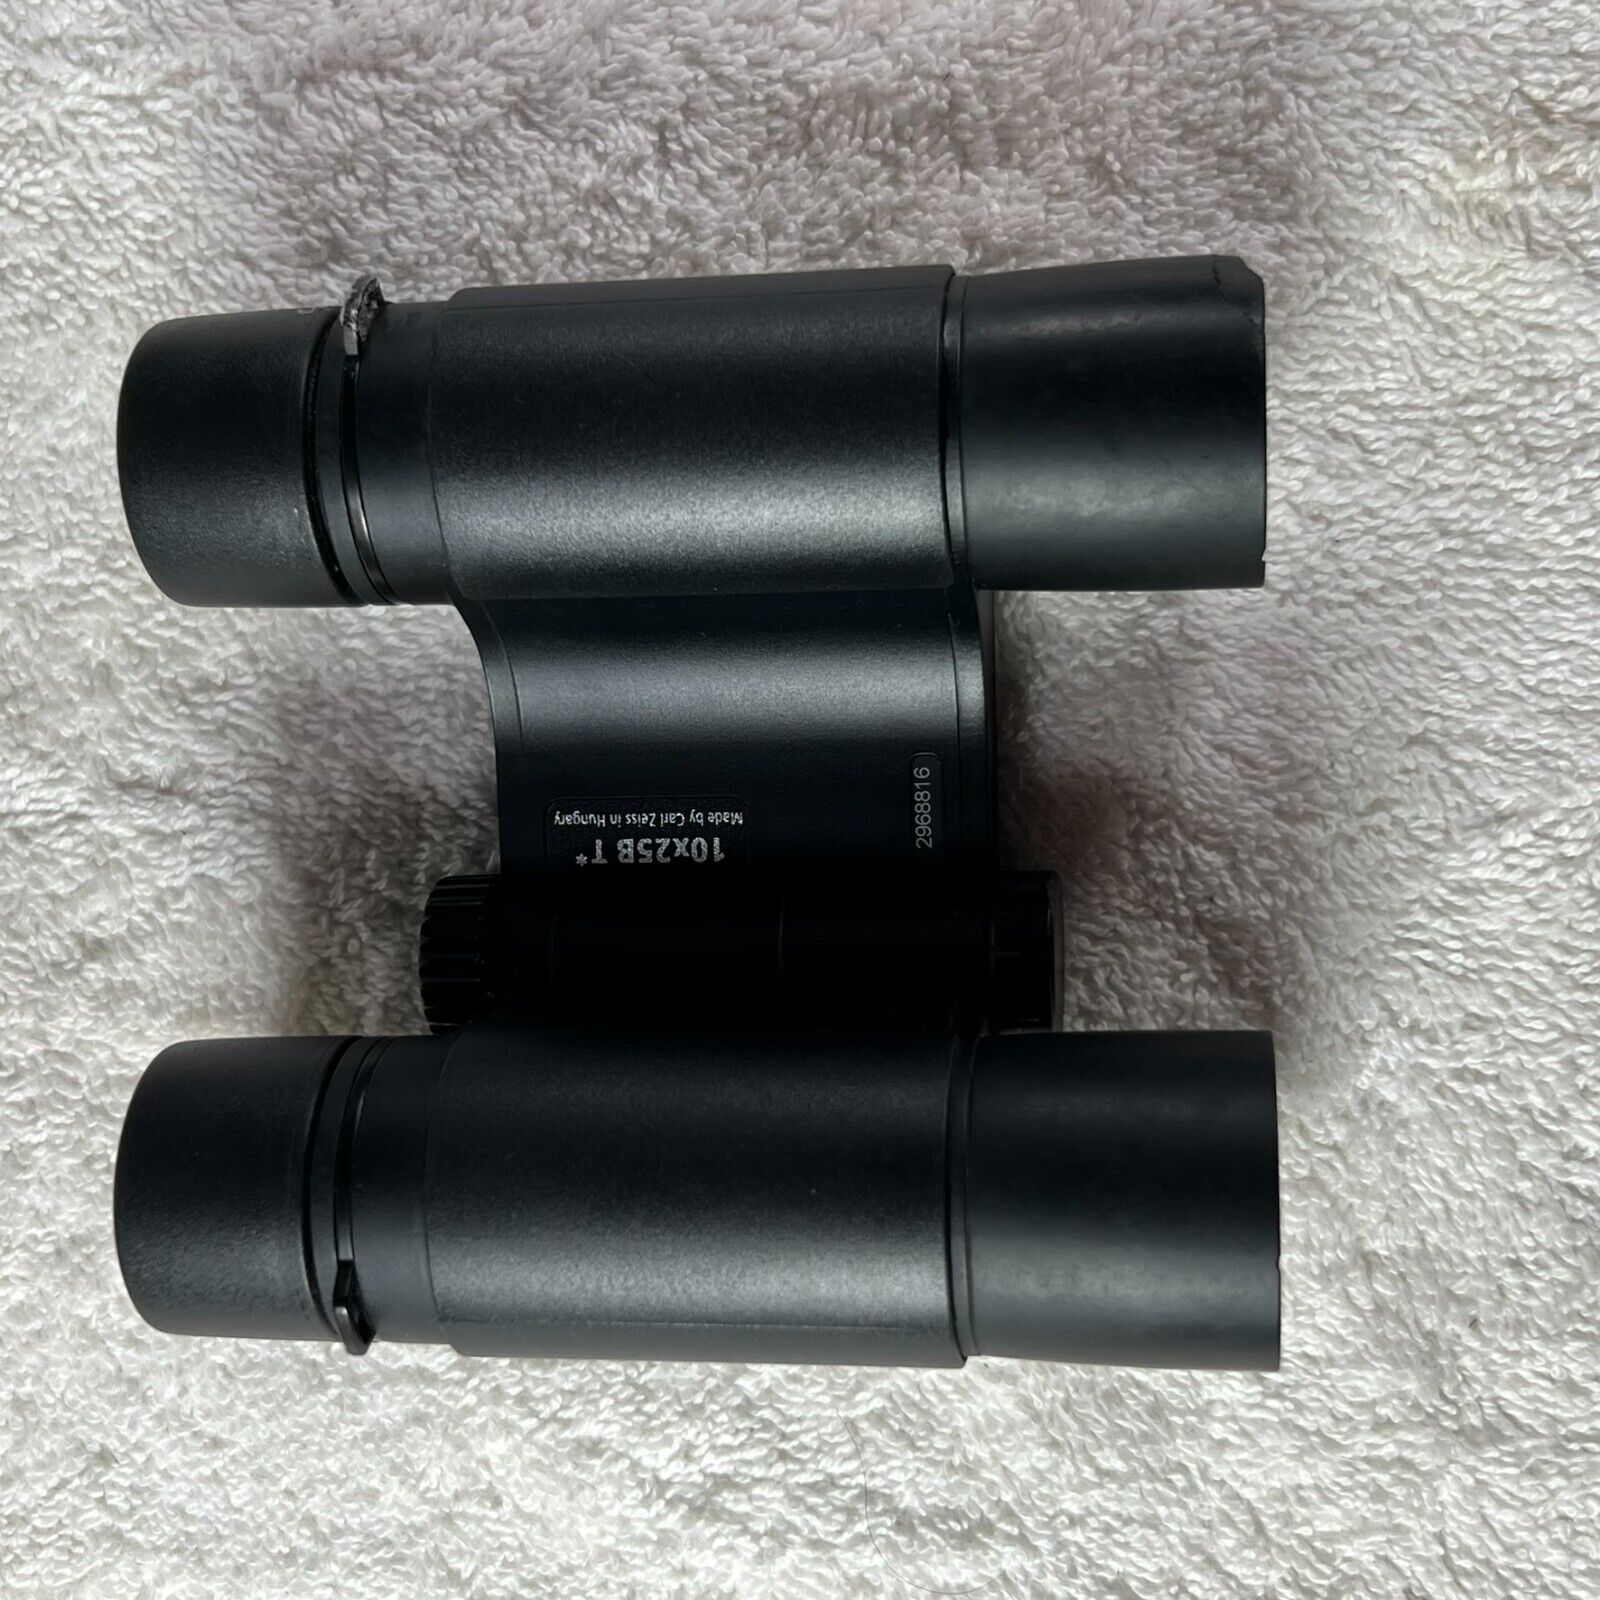 Carl Zeiss Victory Compact Binoculars 10x25B T* Made in Hungary